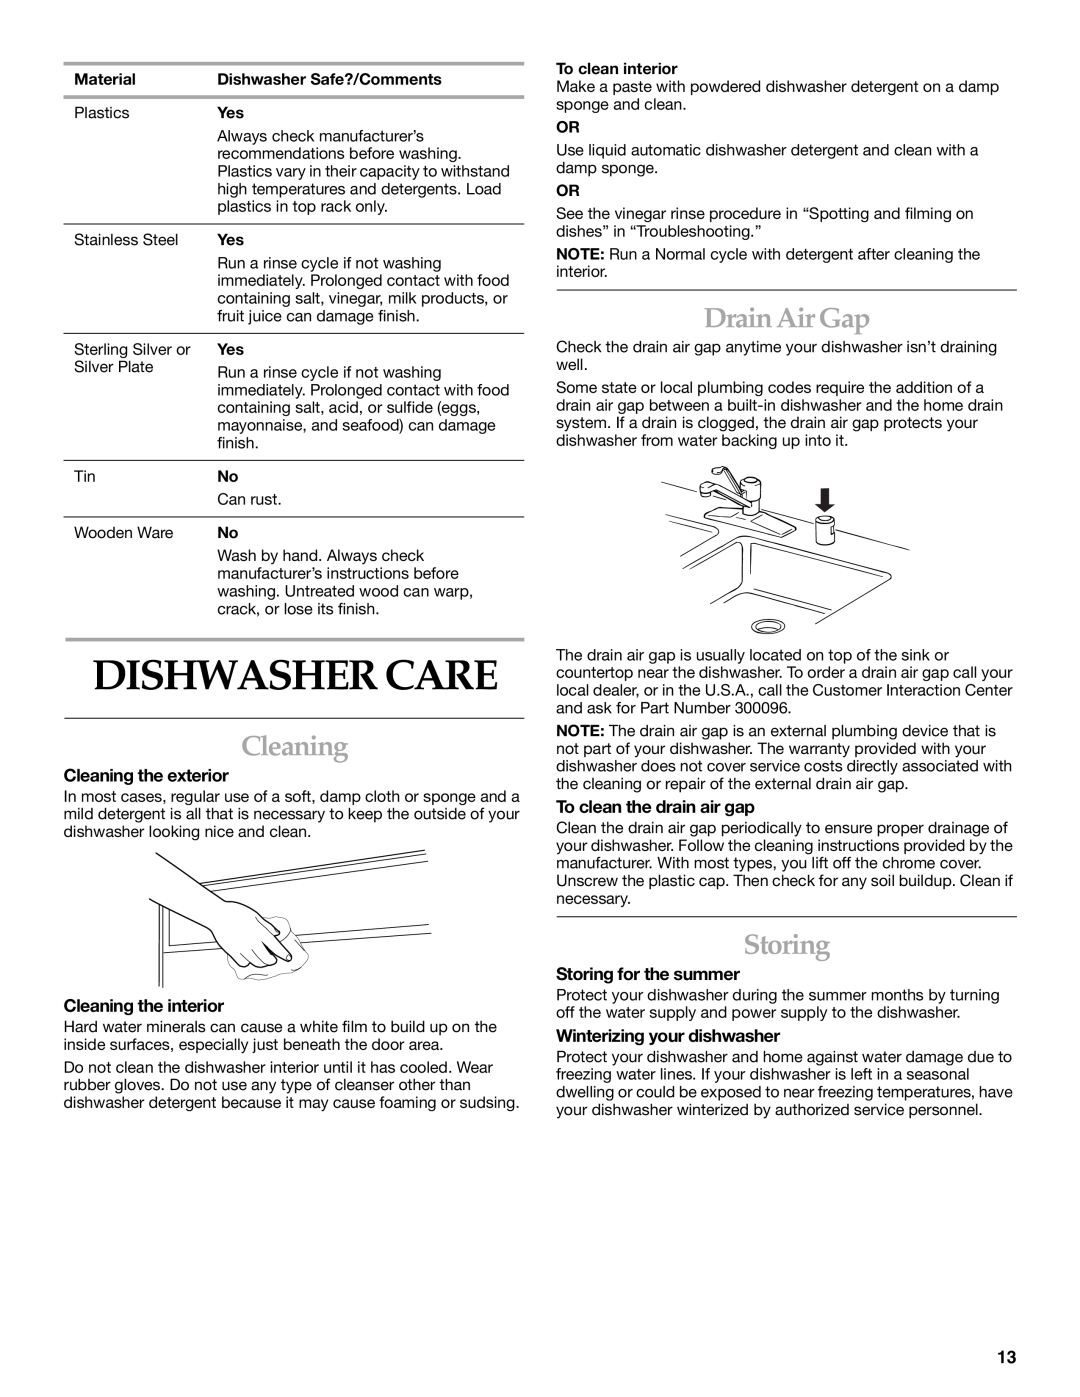 KitchenAid KUDI01FK manual Dishwasher Care, Drain Air Gap, Storing, Cleaning the exterior, Cleaning the interior 